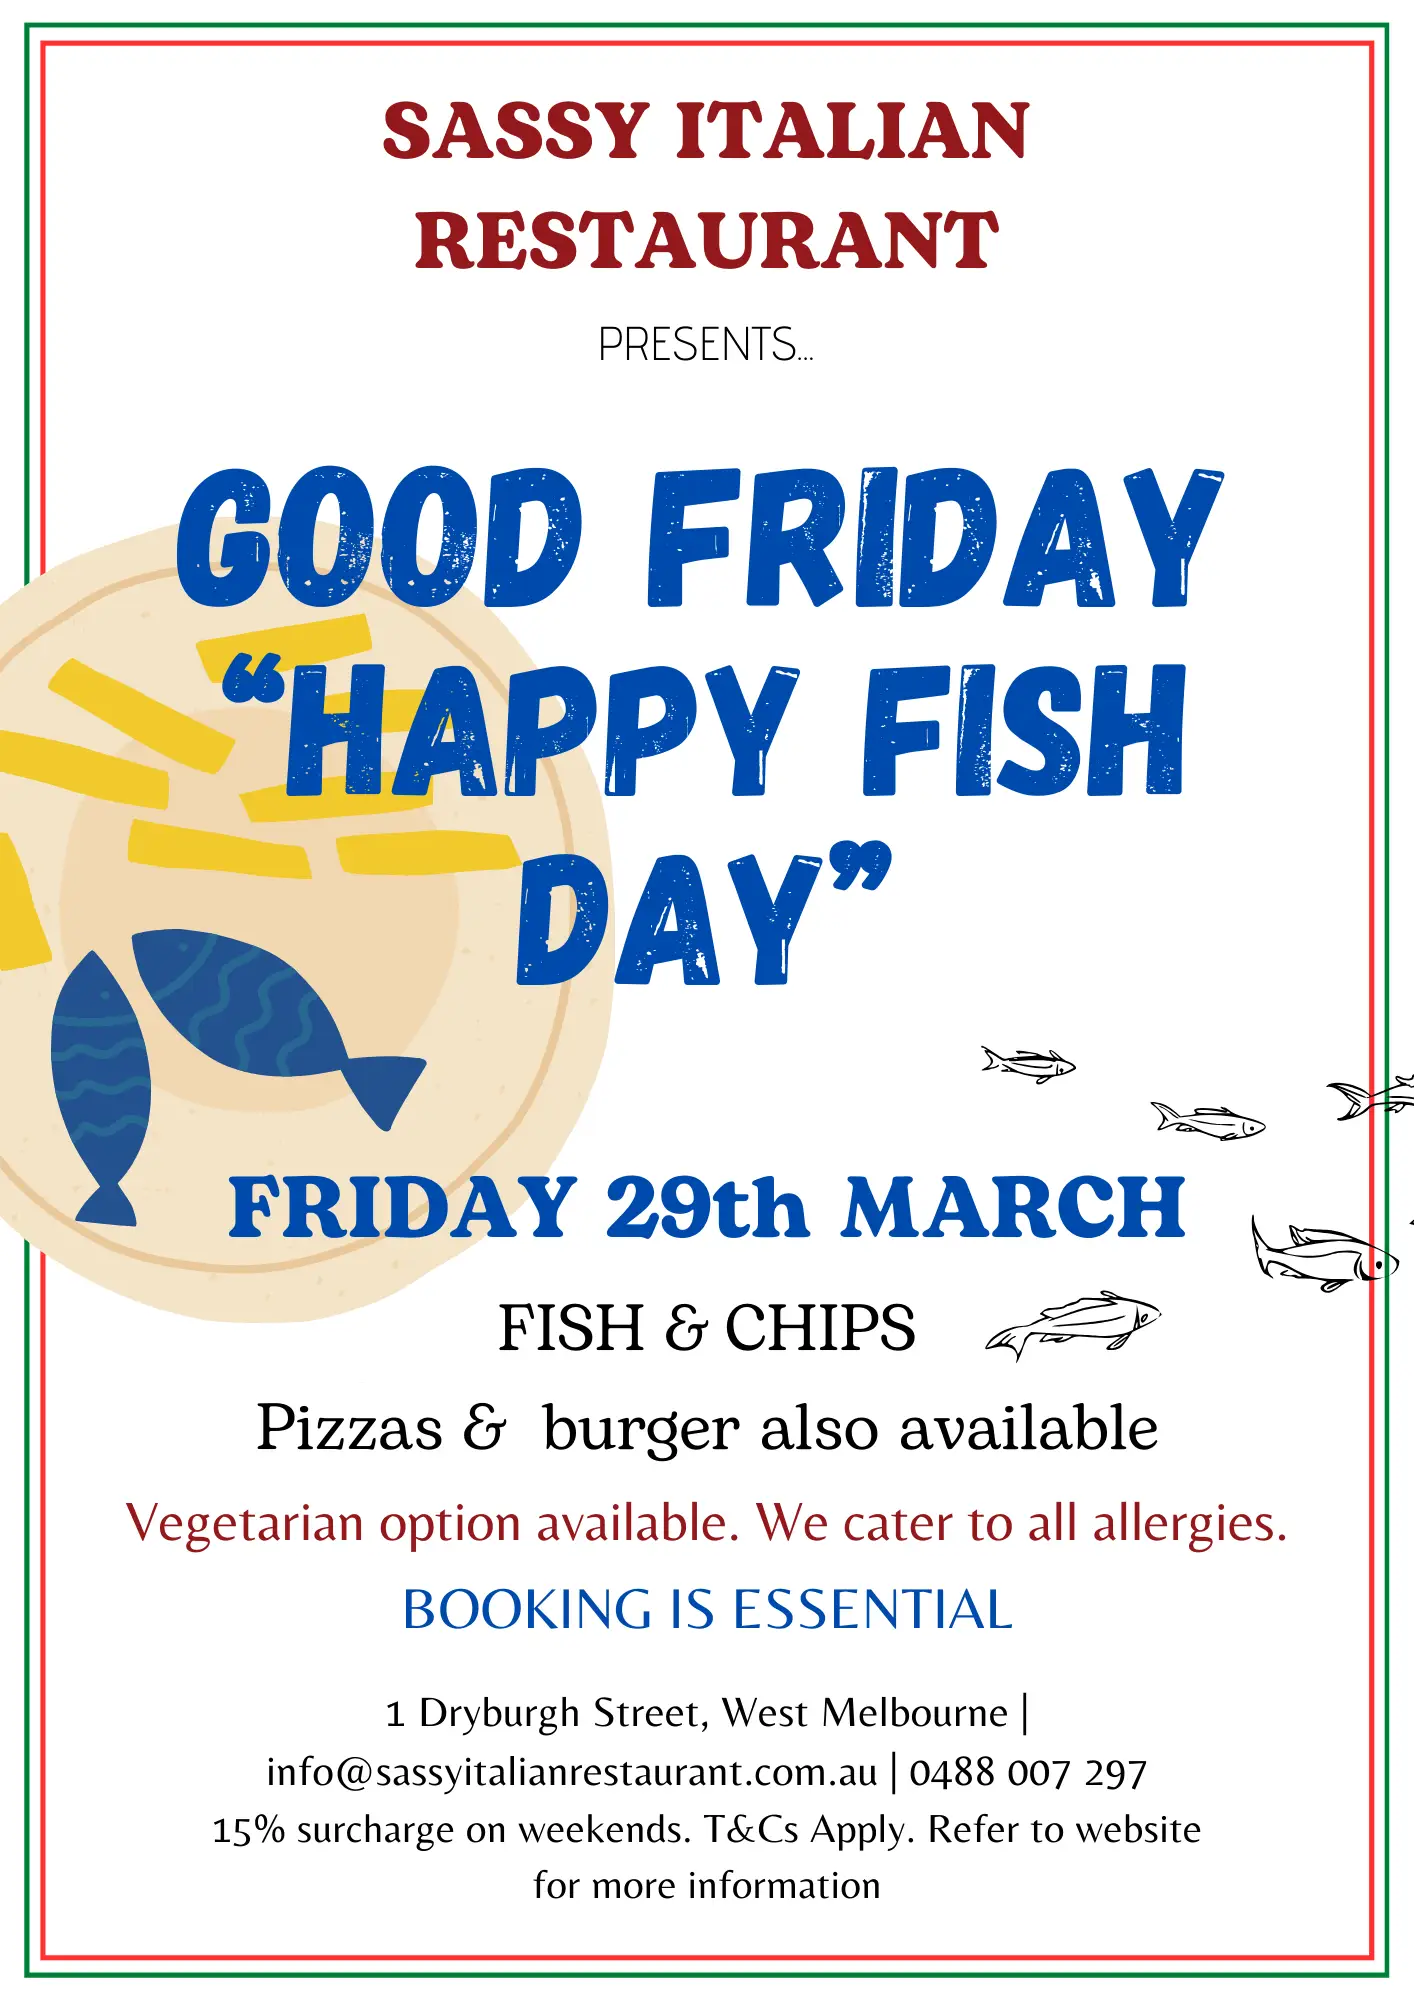 Sassy Italian Restaurant - Good Friday Happy Fish Day - Menu - Advertising Poster